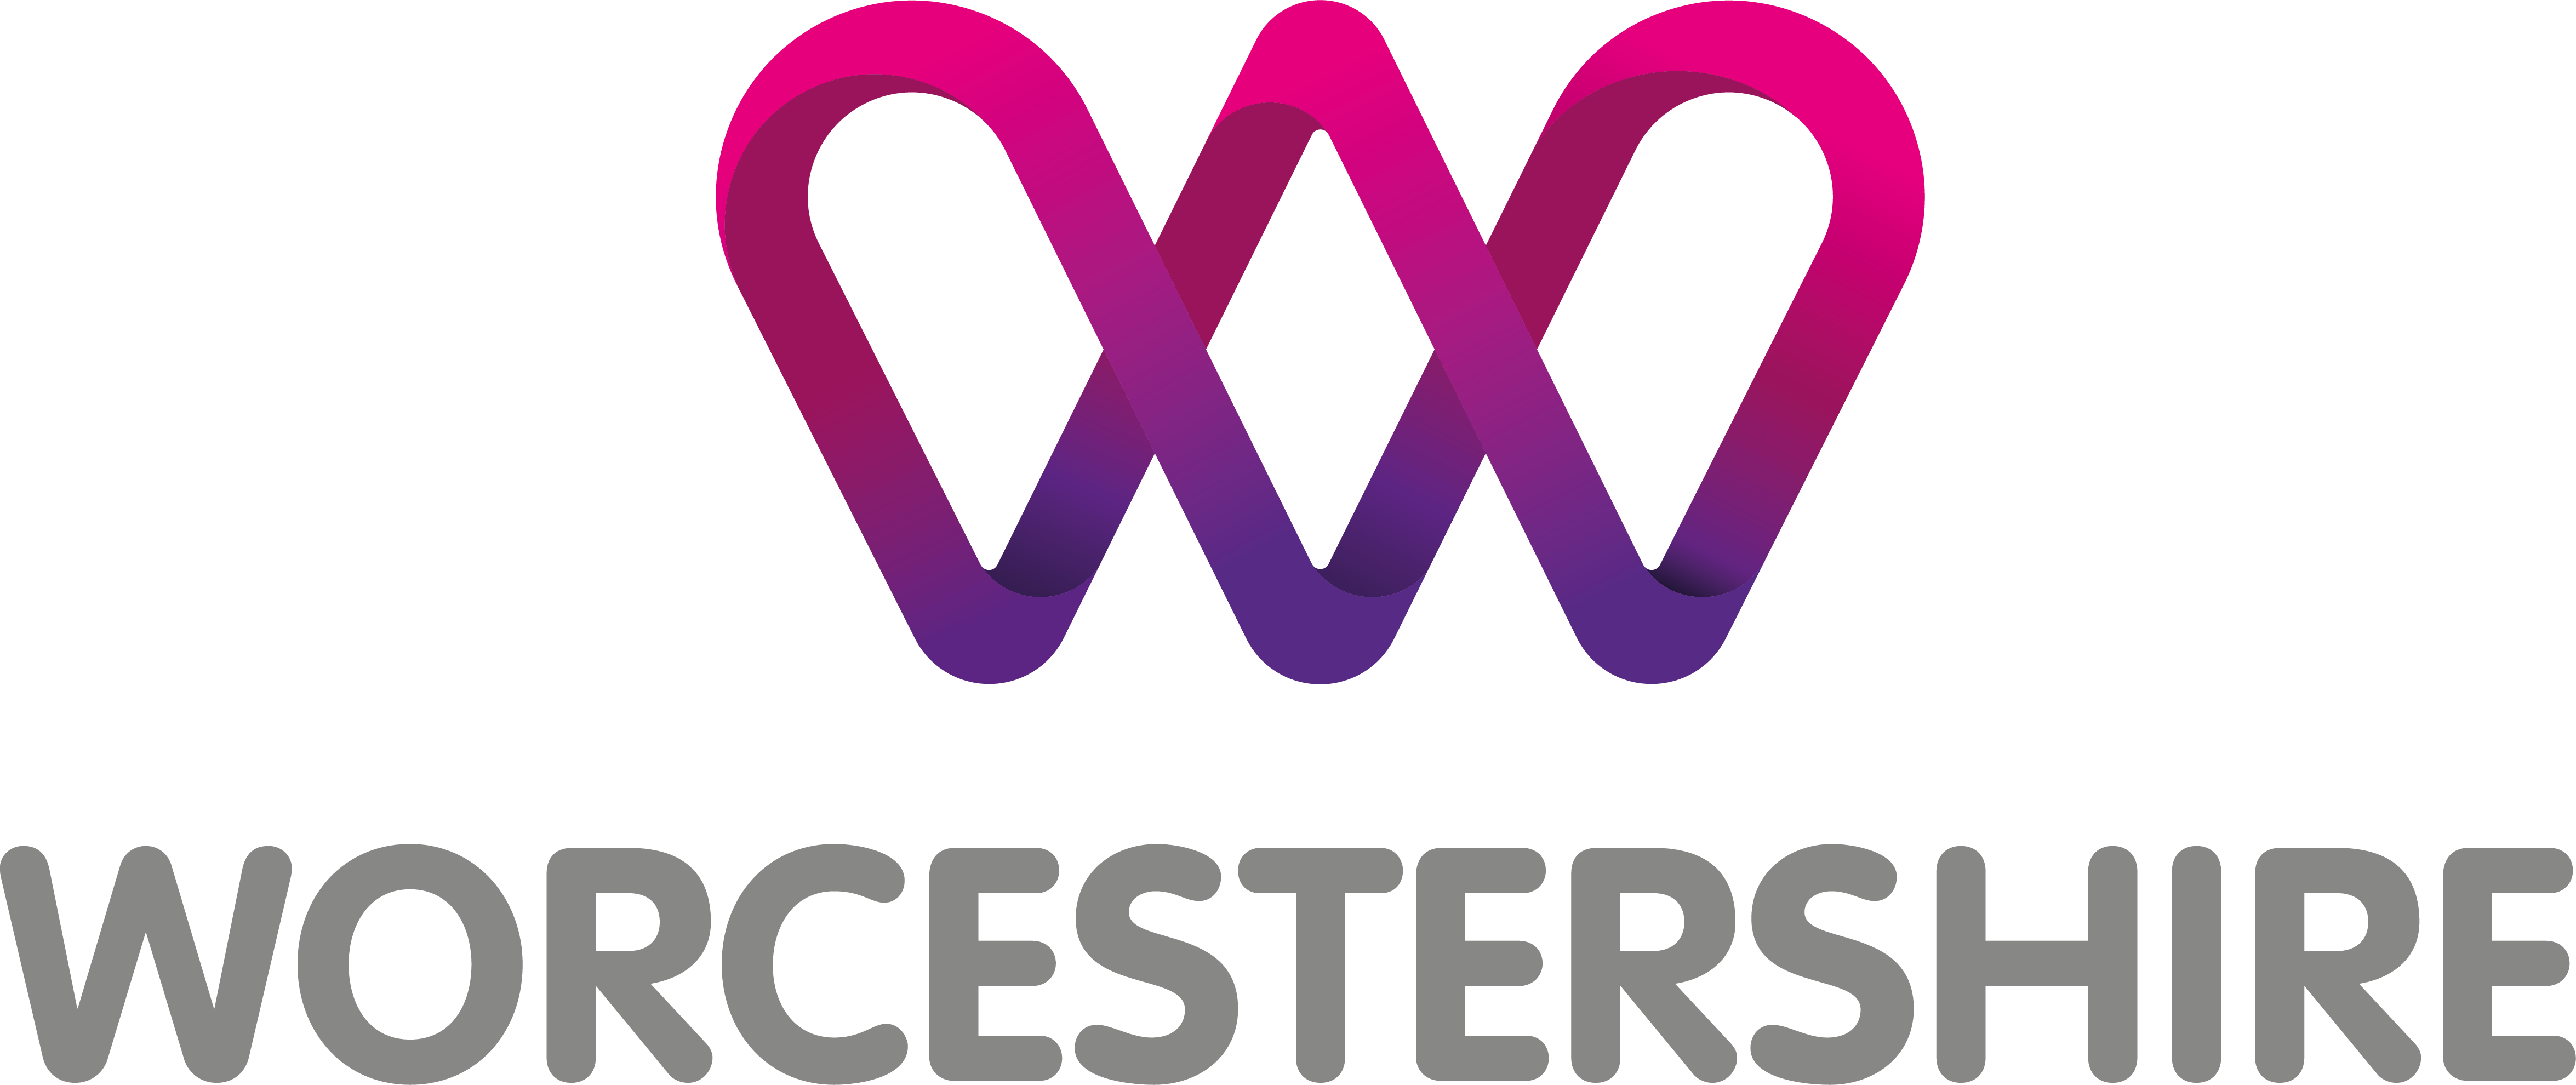 One Worcestershire logo